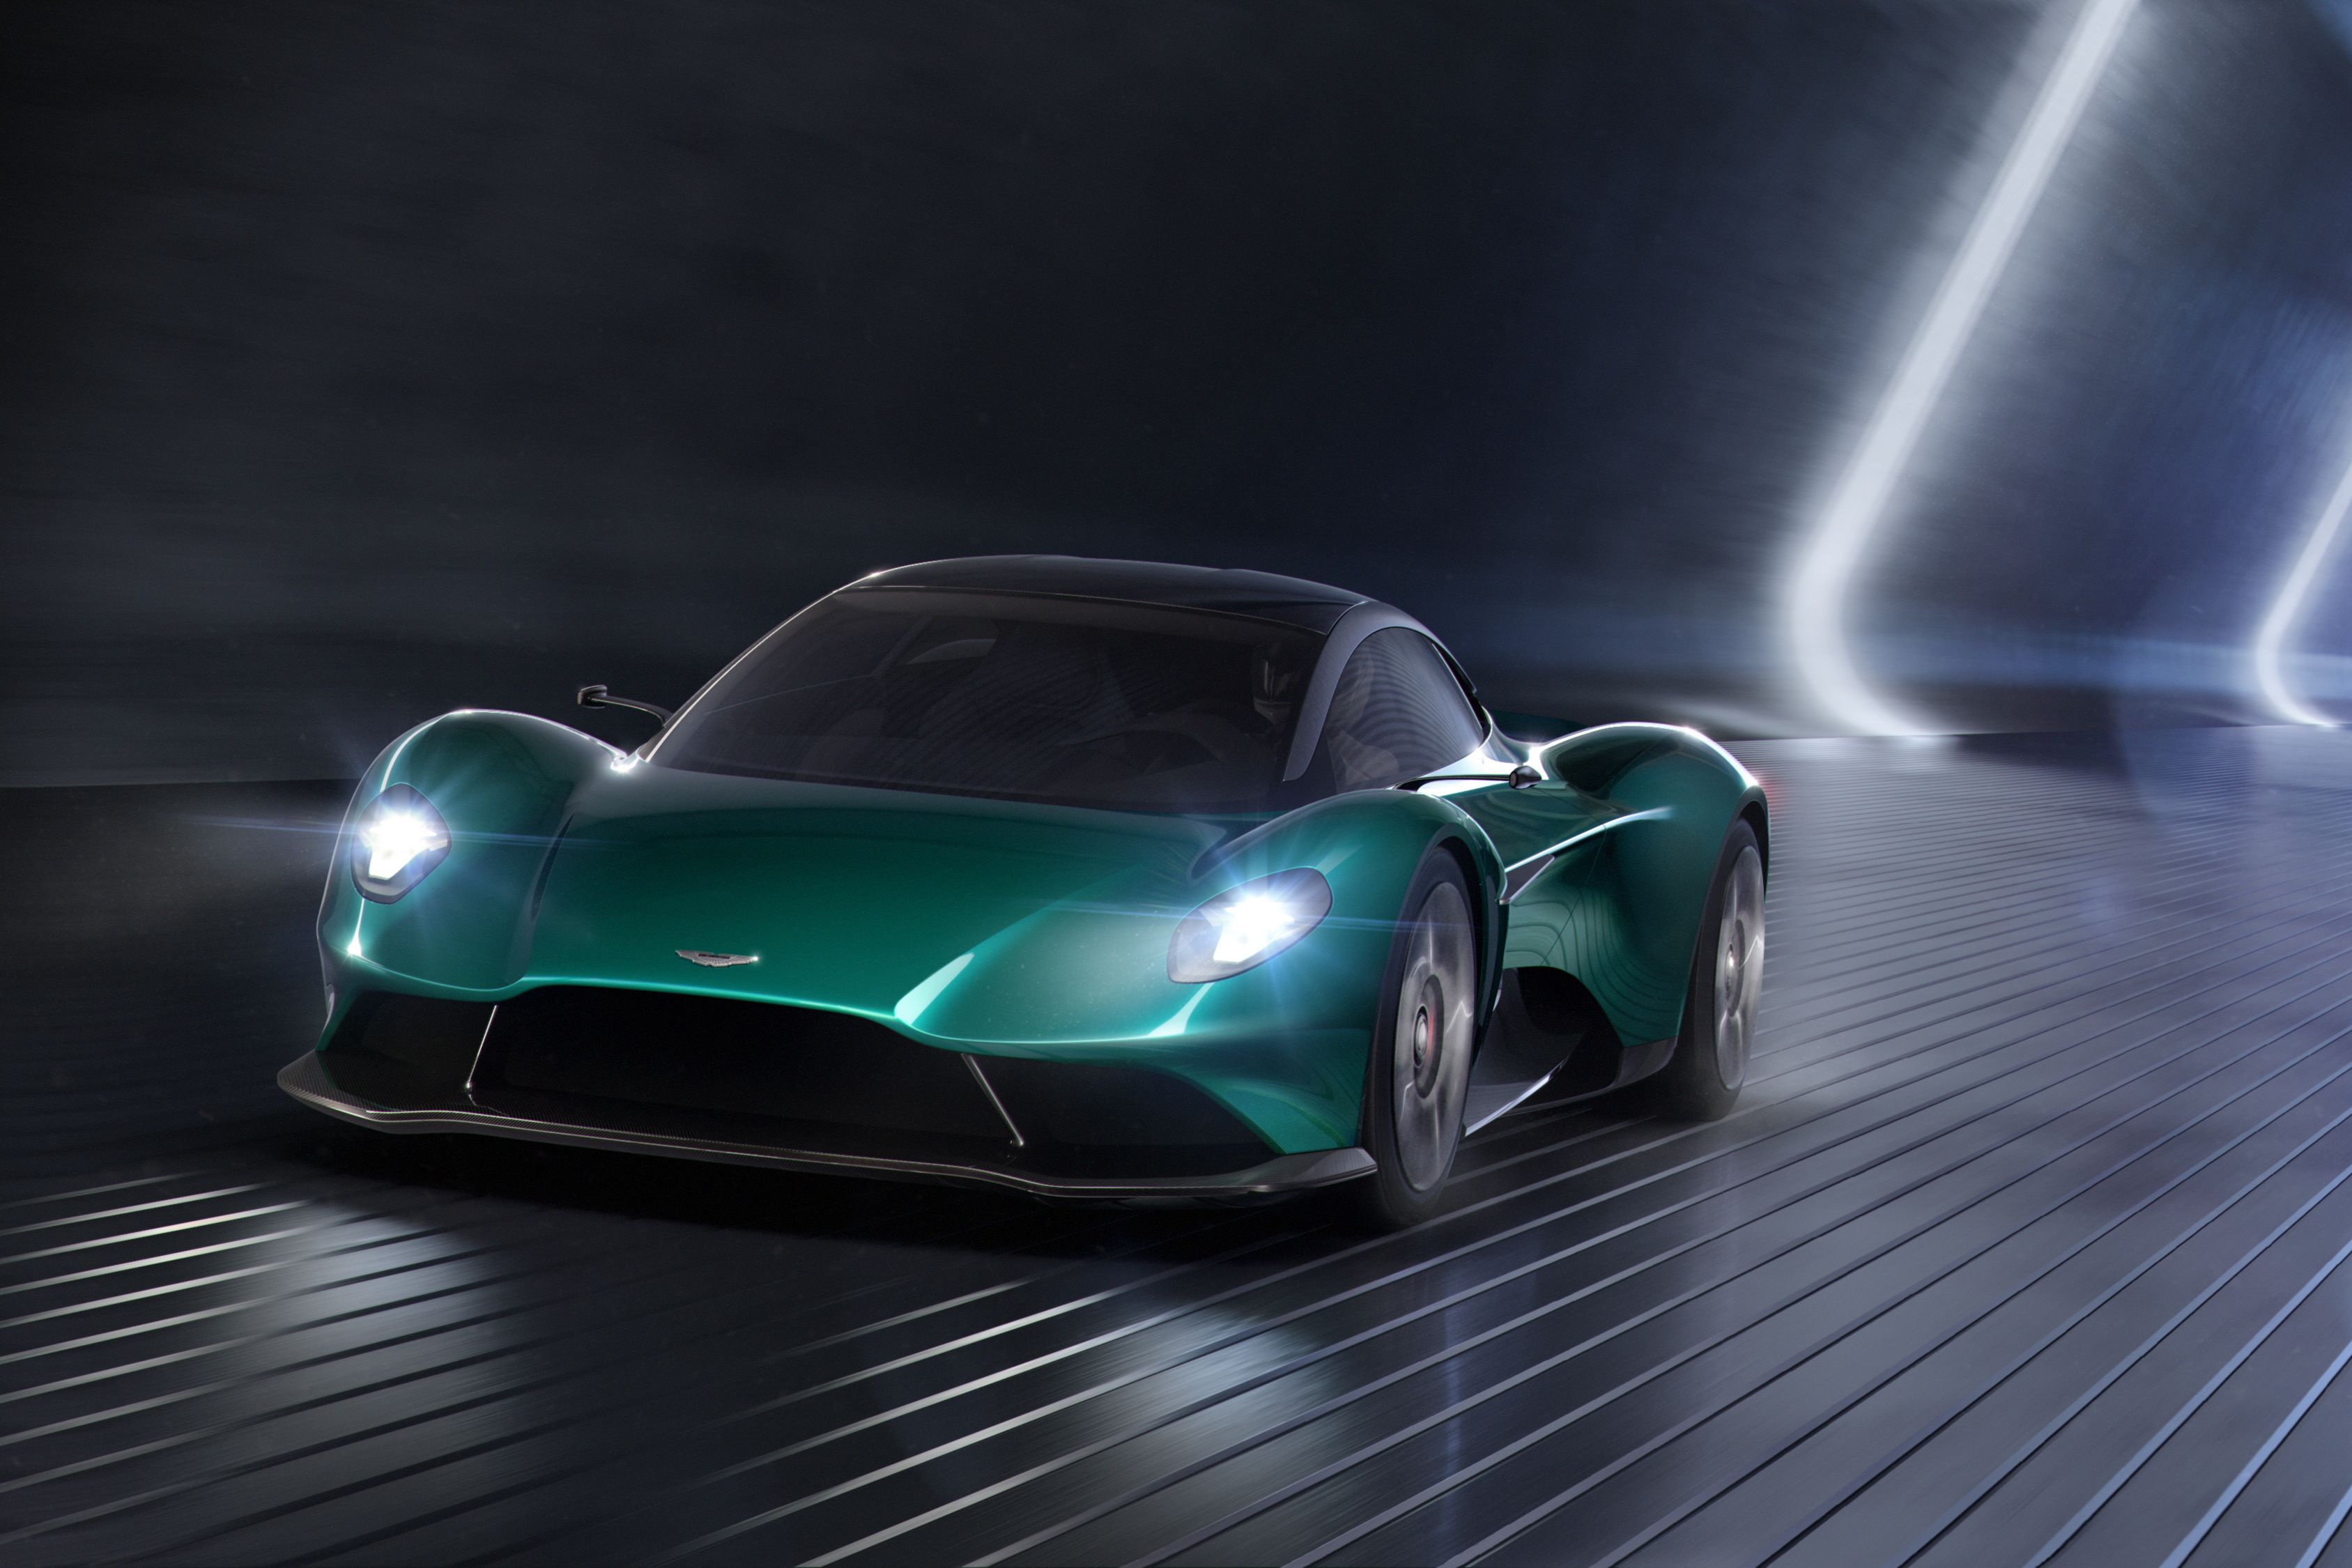 Aston Martin Vanquish: What We Know So Far